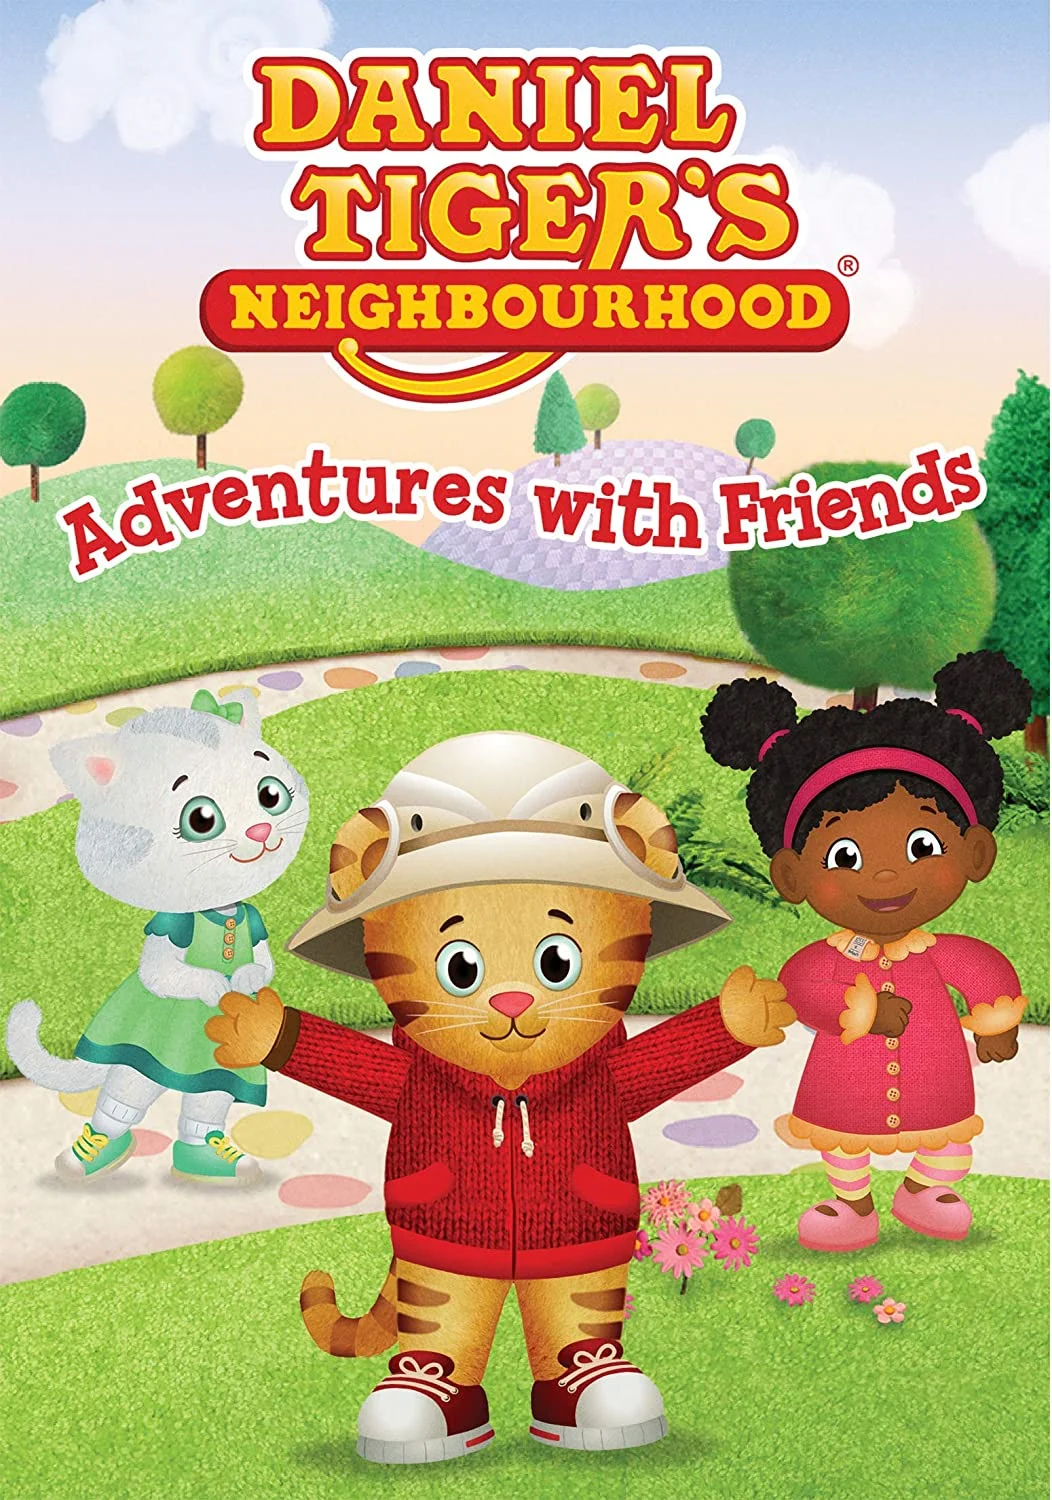 Daniel Tiger’s Neighborhood: Adventure with Friends (DVD) on MovieShack